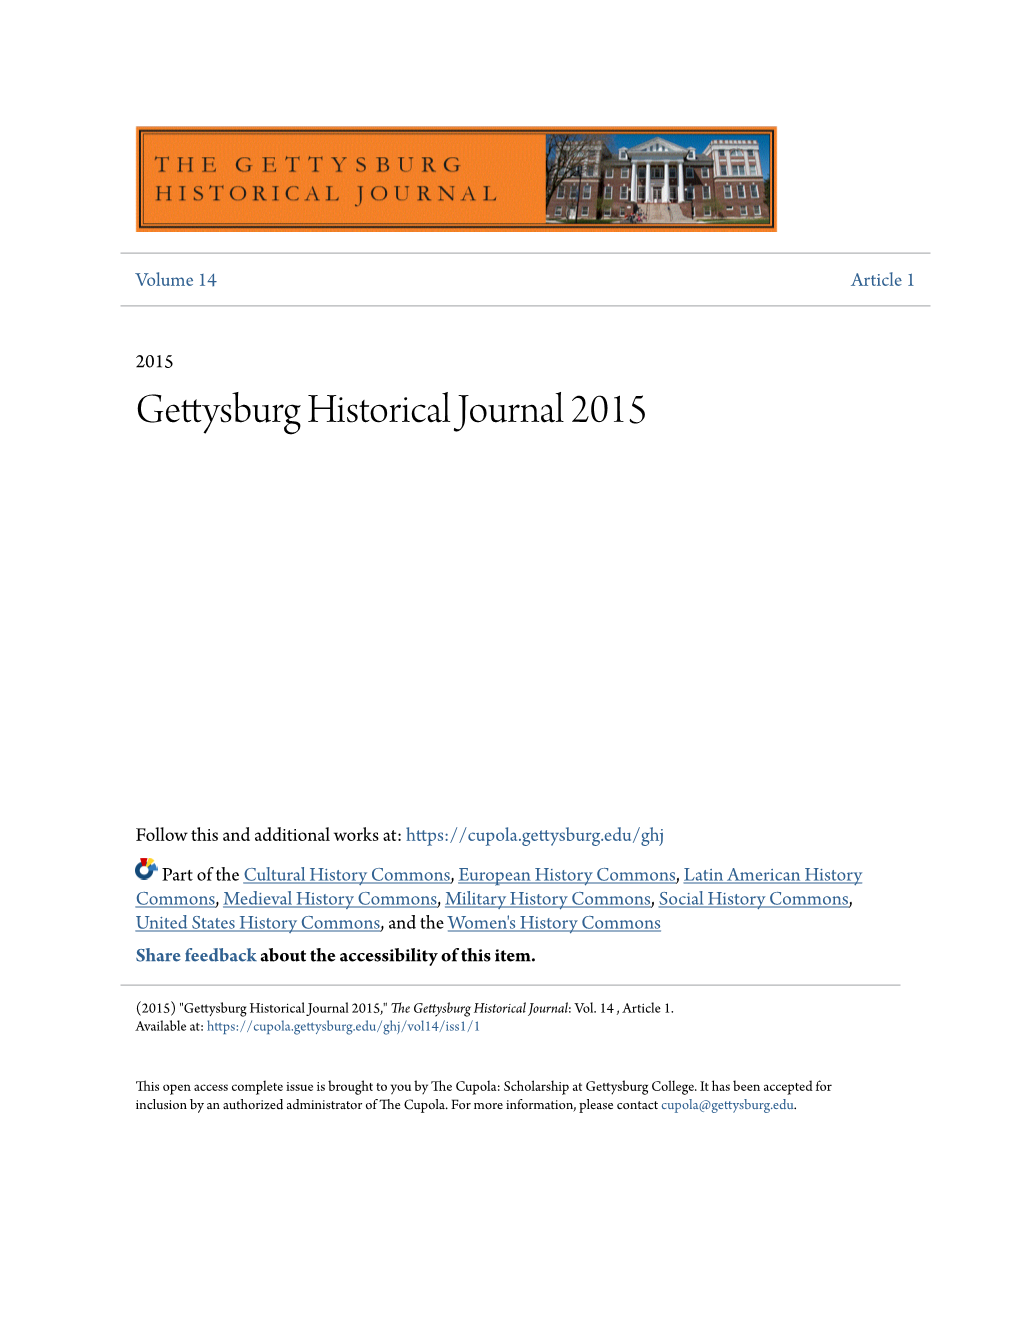 Gettysburg Historical Journal 2015